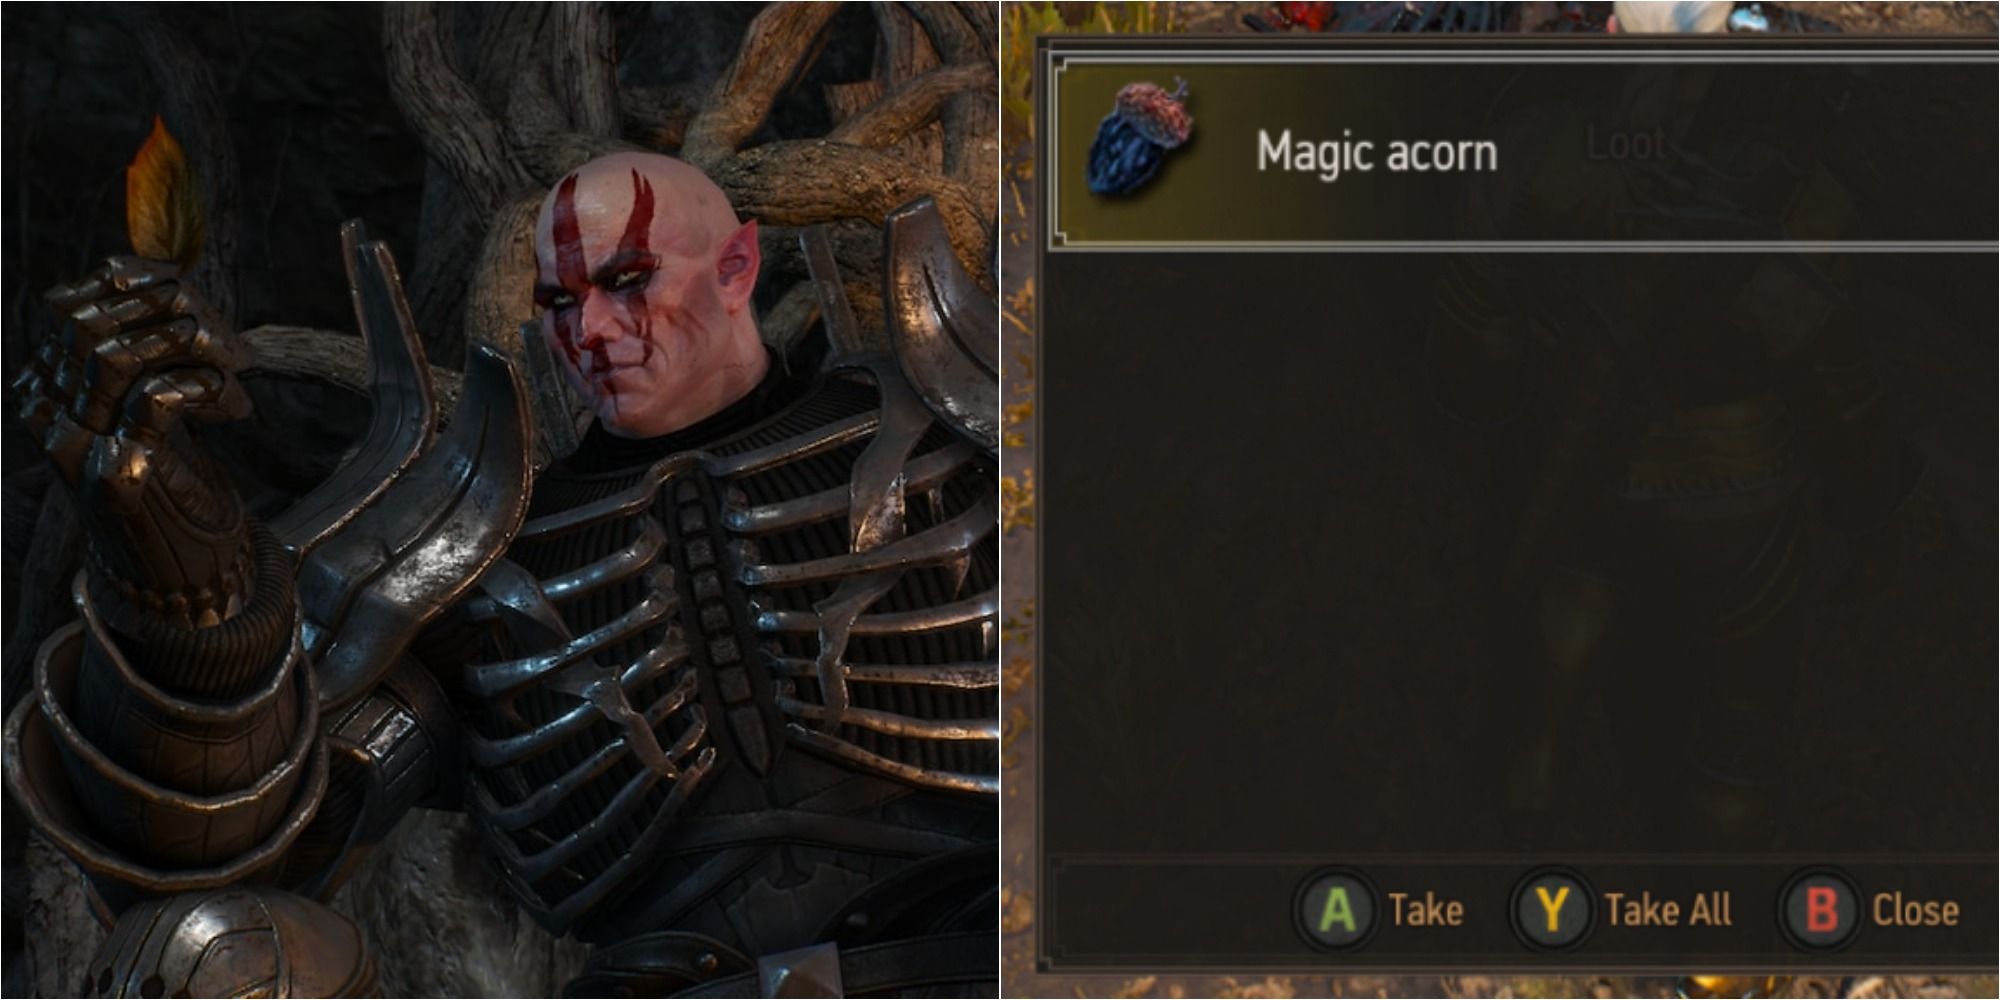 Witcher 3 Magic Acorn Guide Featured Split Image